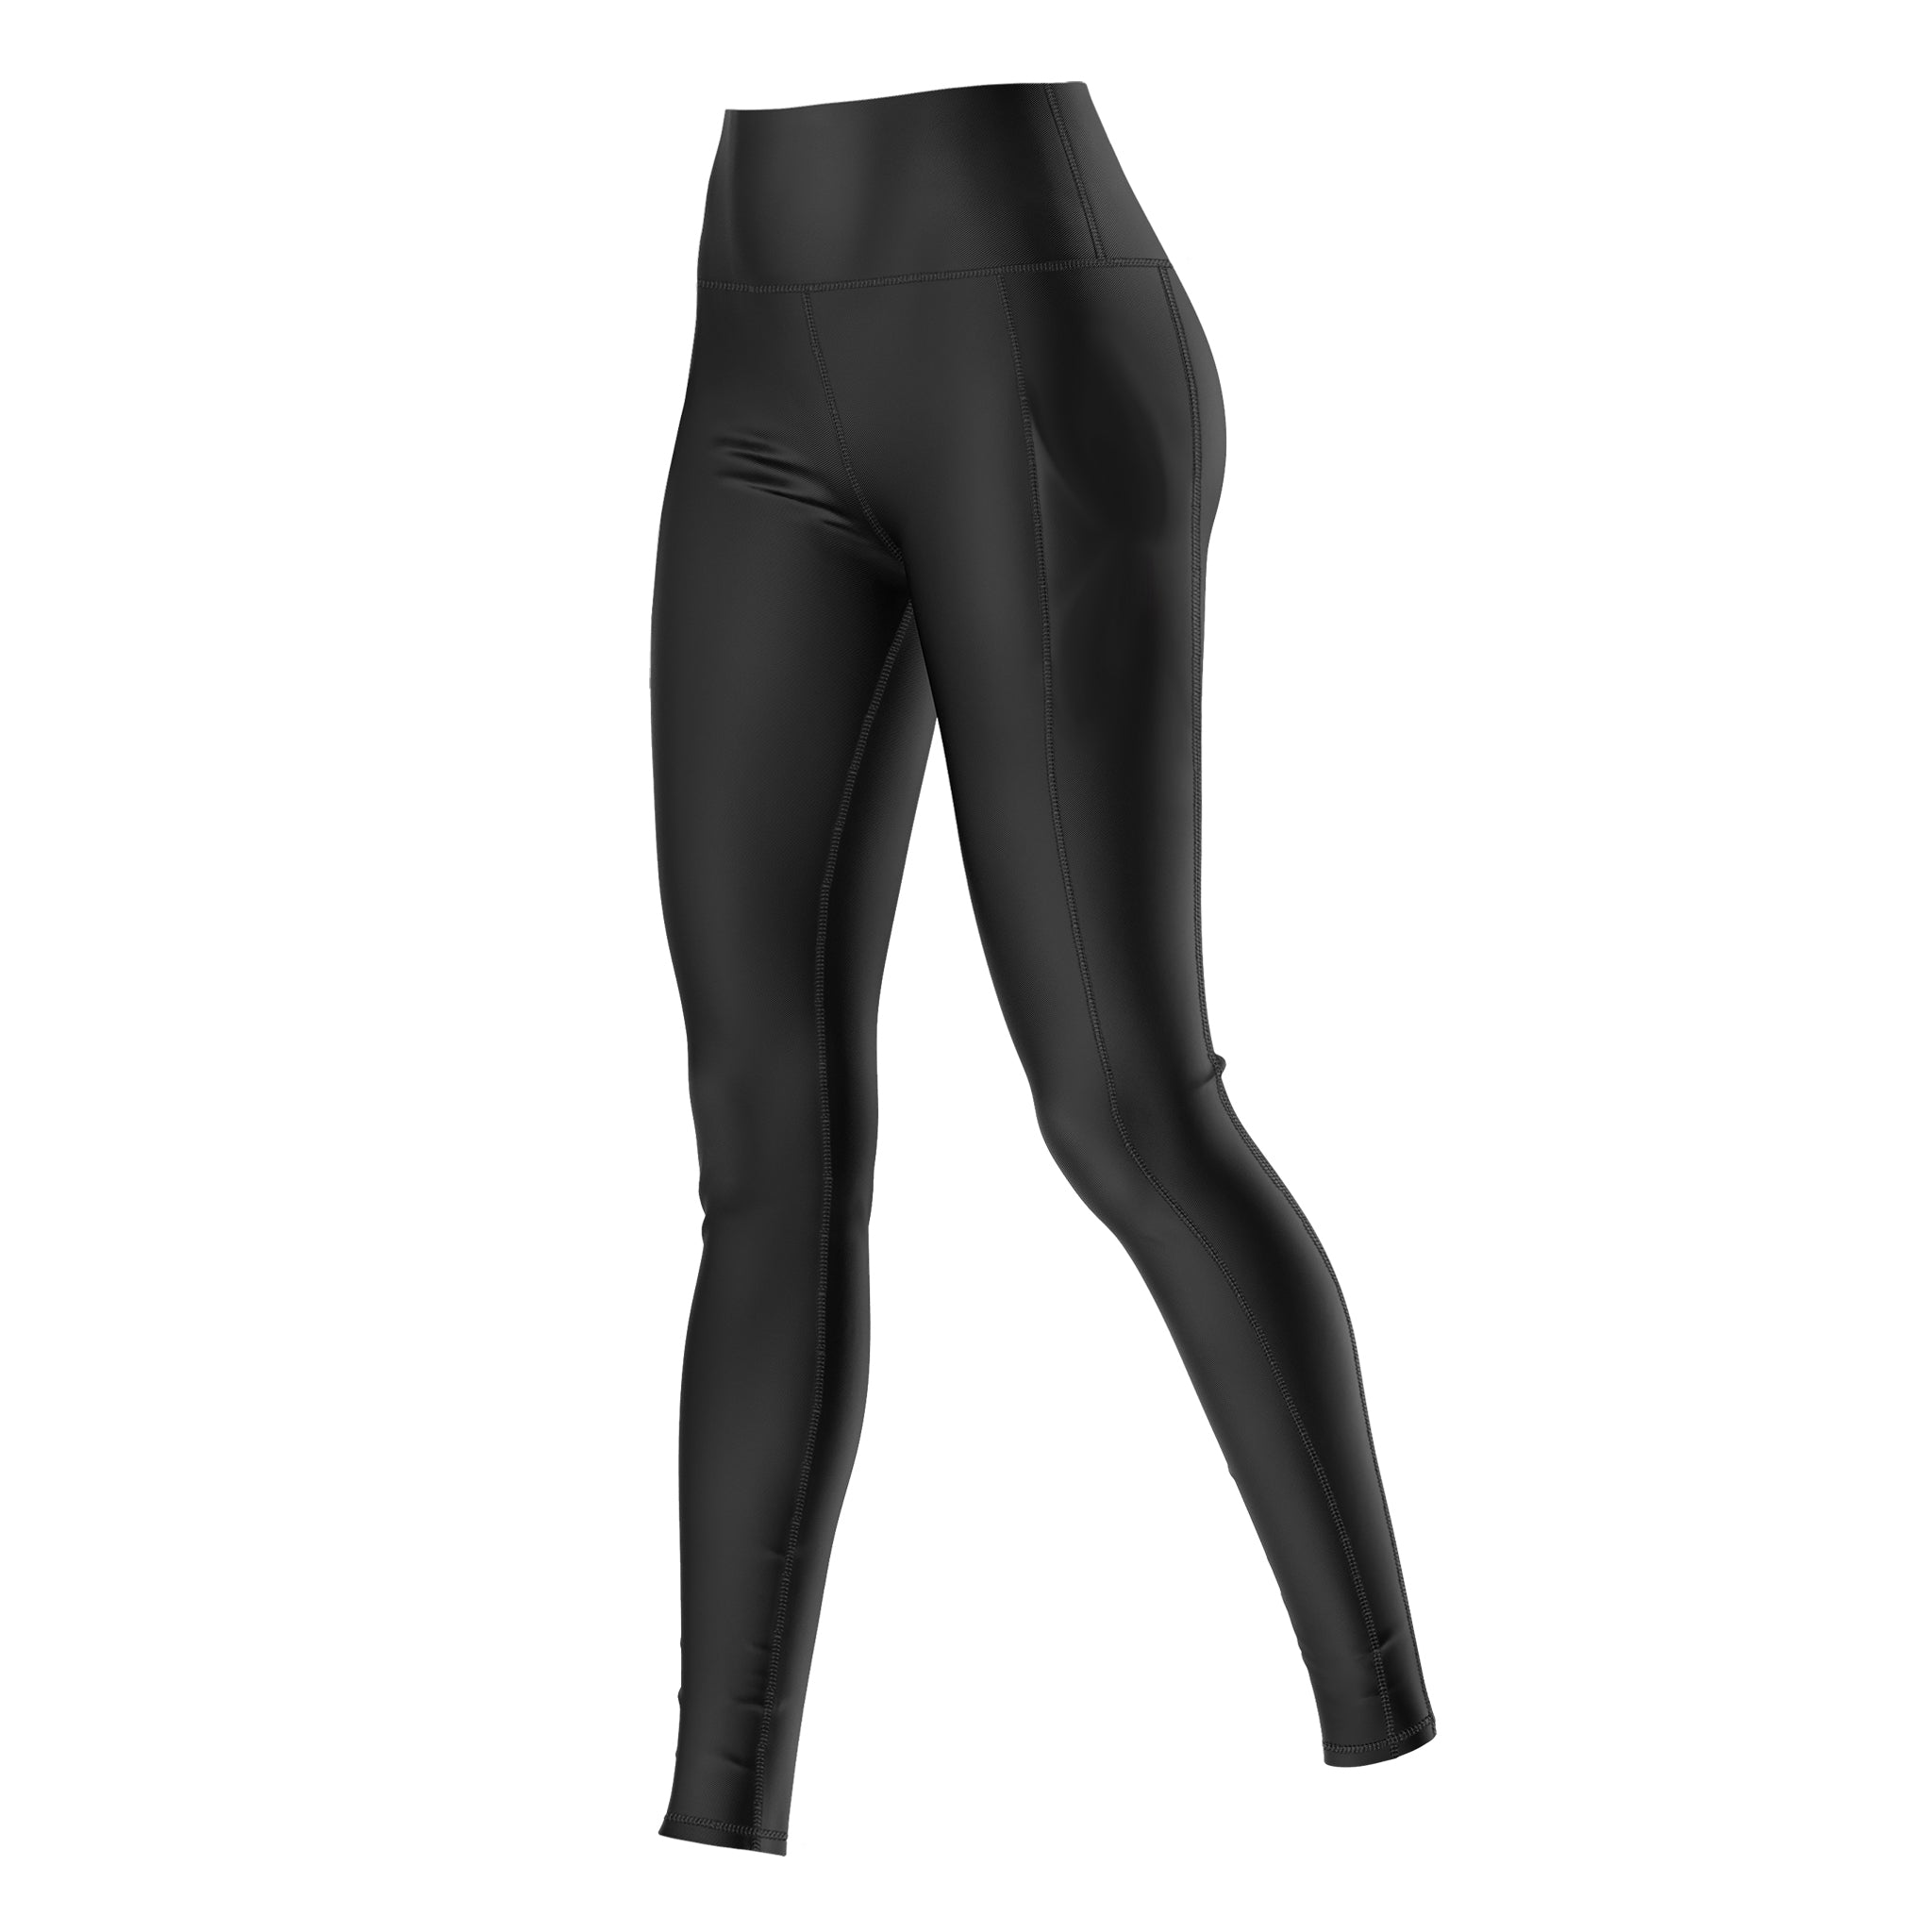 Womens 32° Degrees Heat Legging Base Layer Pant, Black, 2-Pack